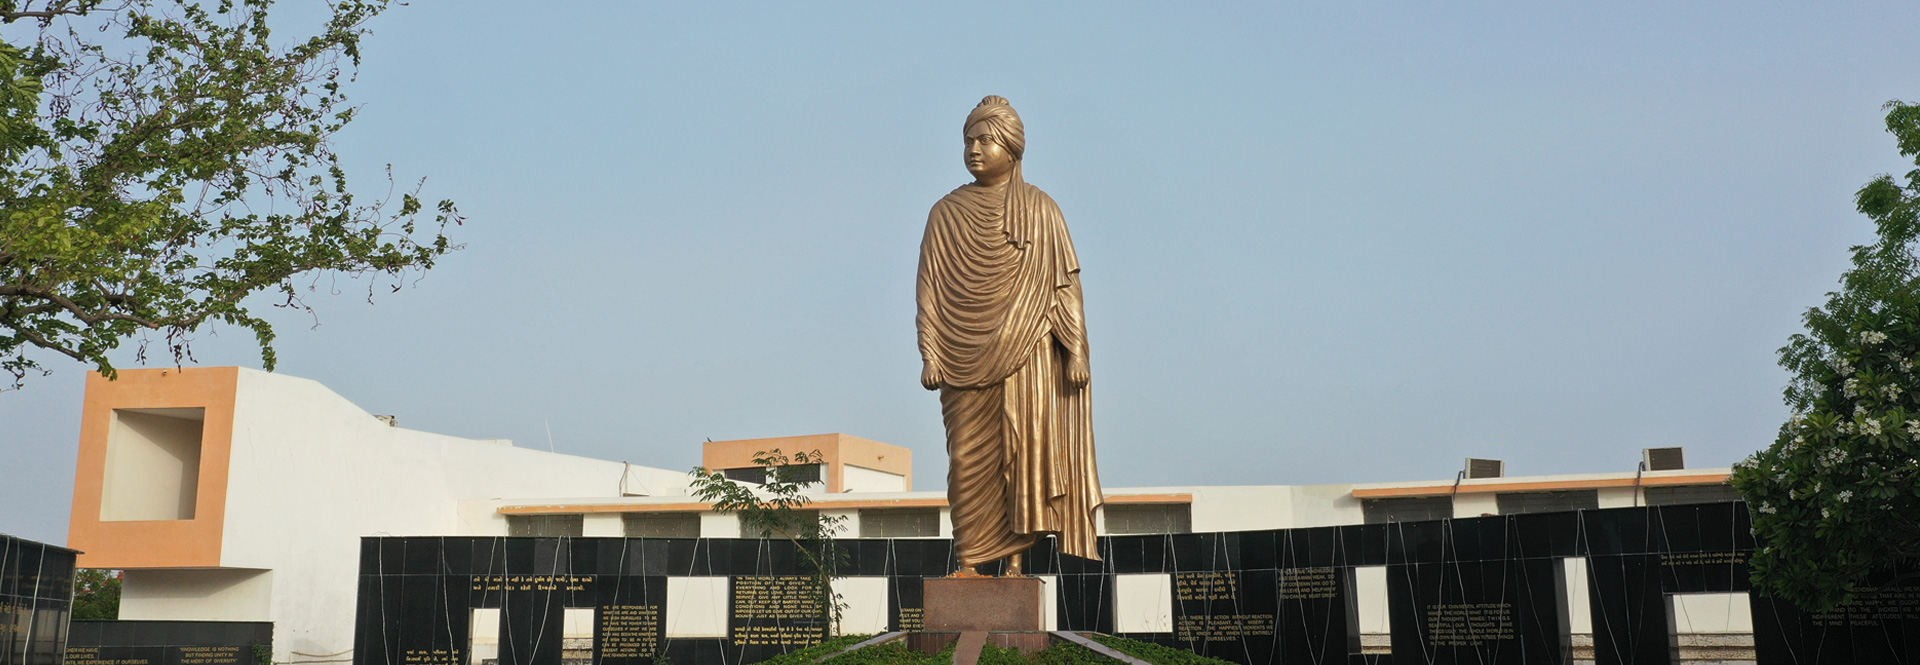 Swami Vivekananda Plaza